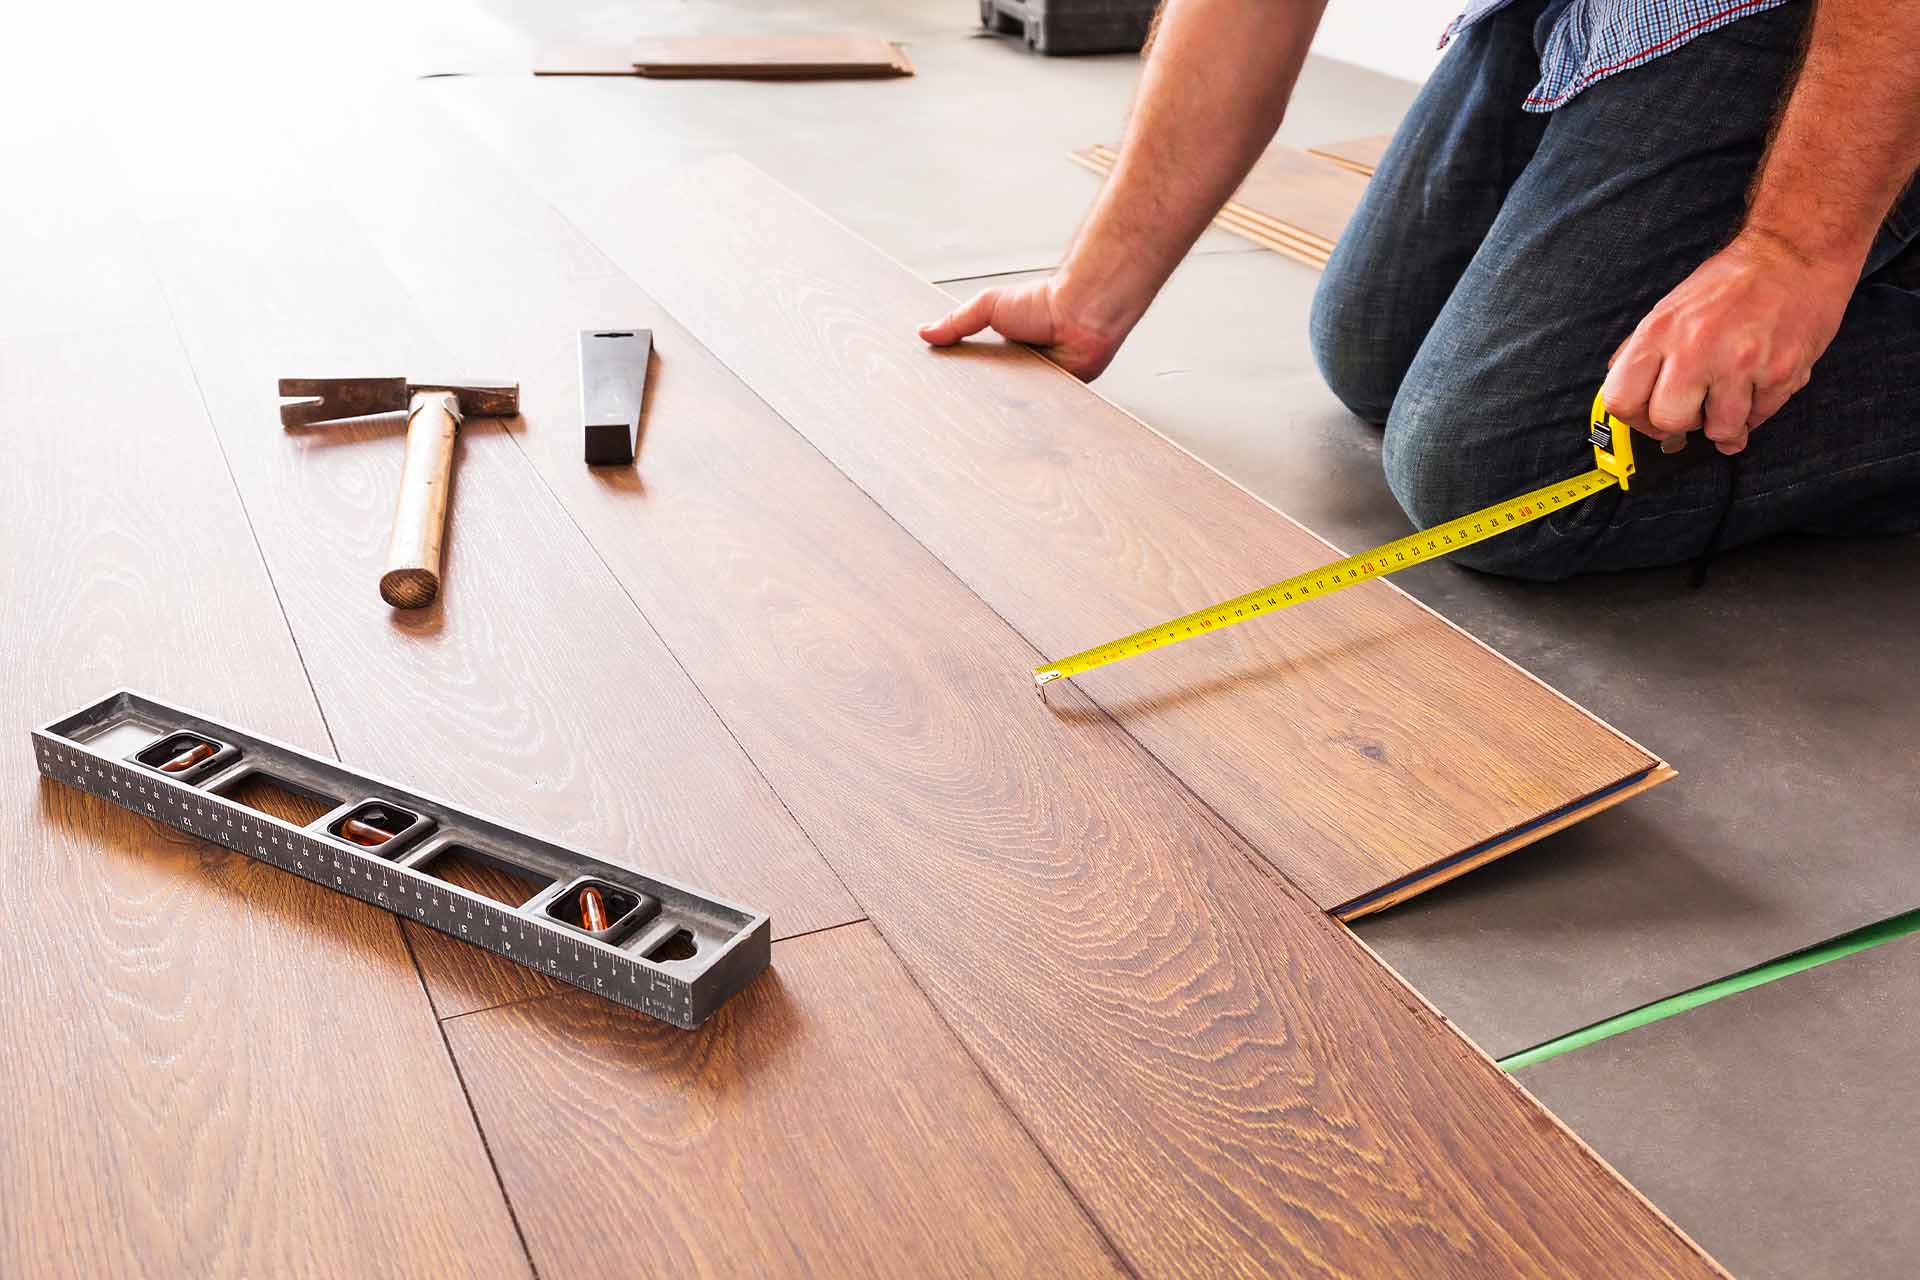 How To Repair Damaged Laminate Floor